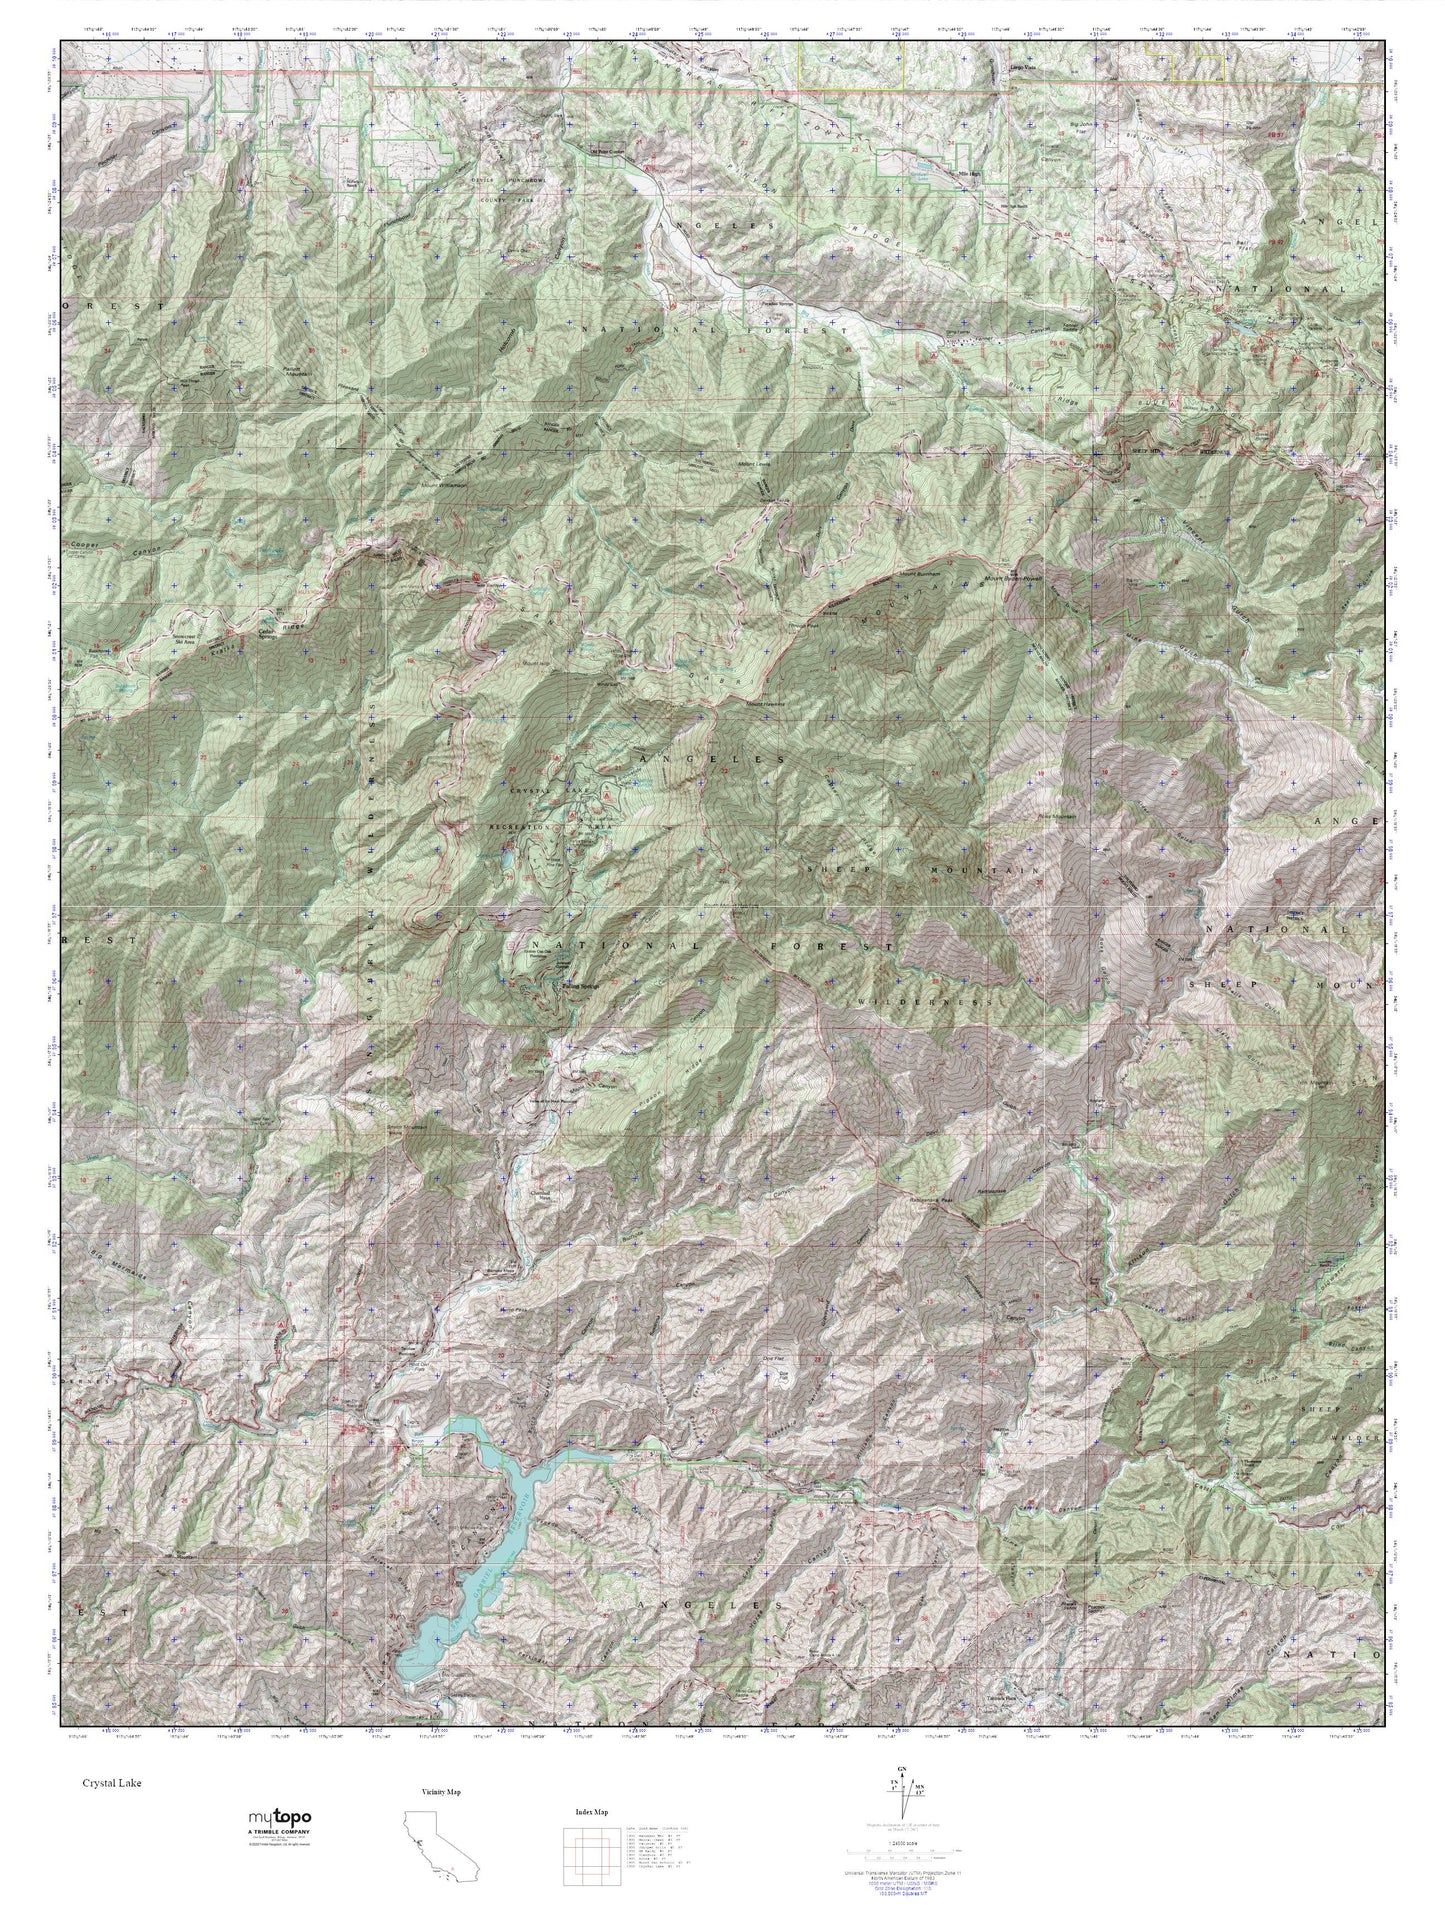 Crystal Lake MyTopo Explorer Series Map Image